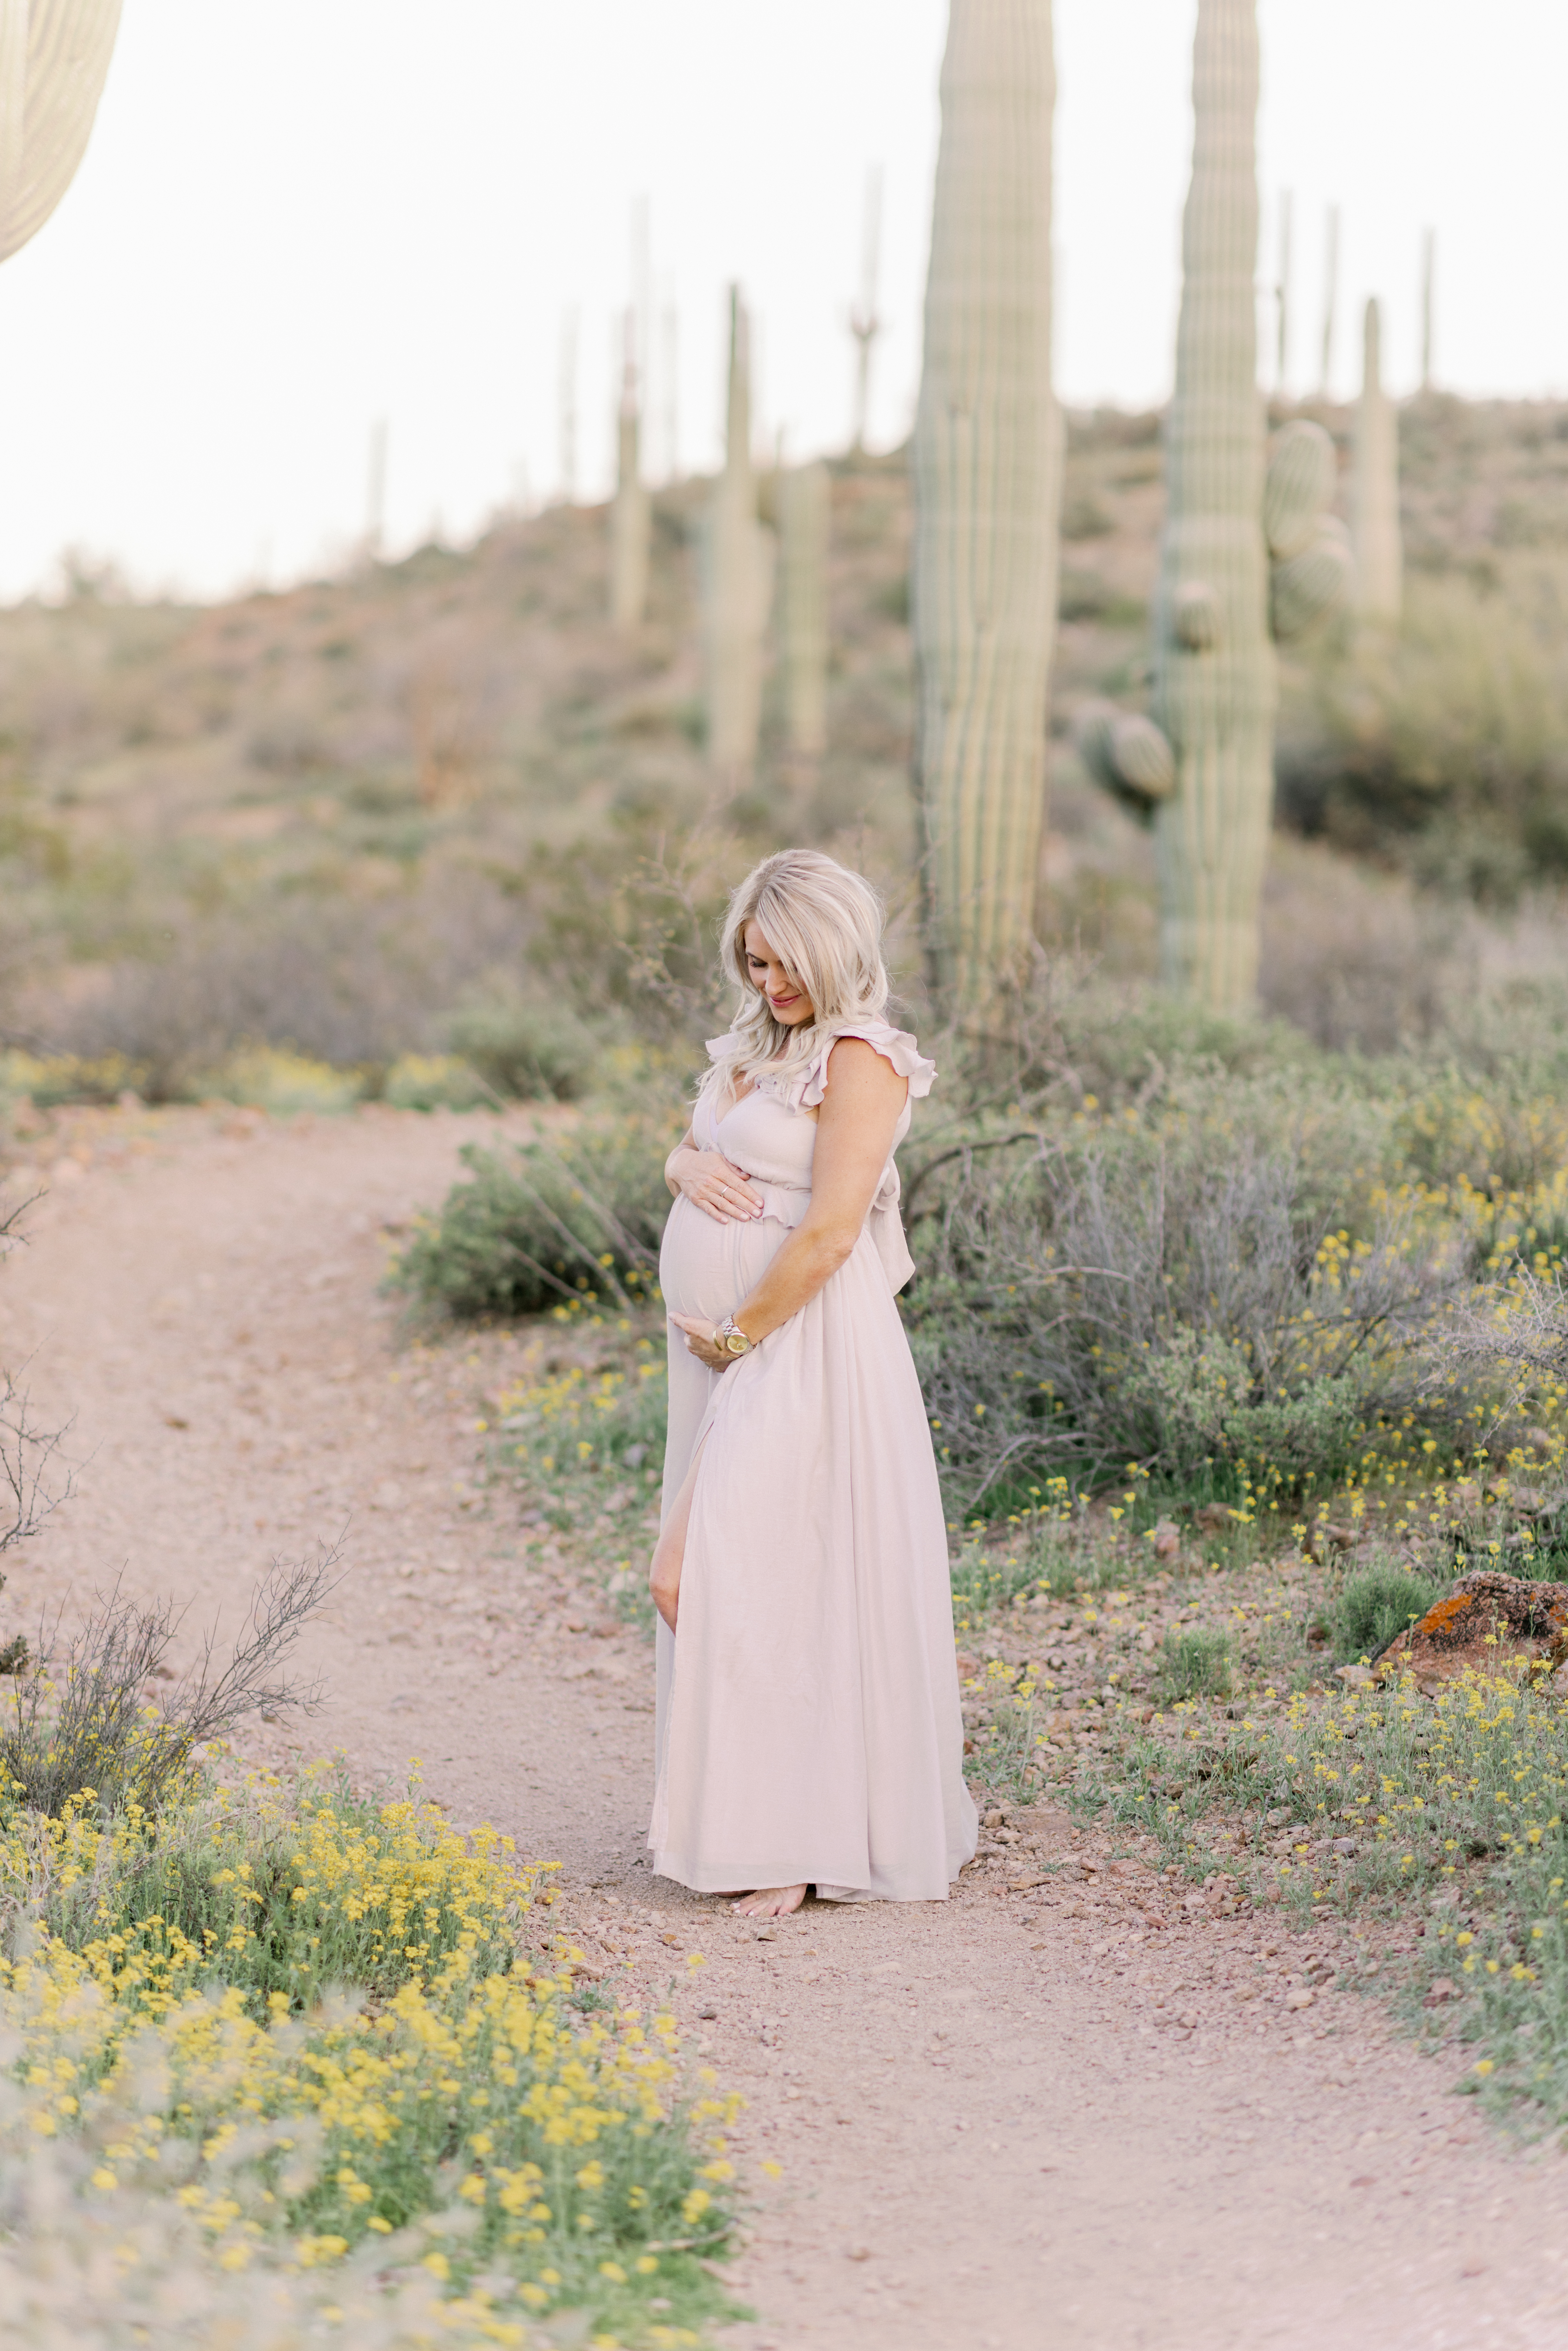 Maternity Photos in Tucson Arizona taken by Melissa Fritzsche Photography